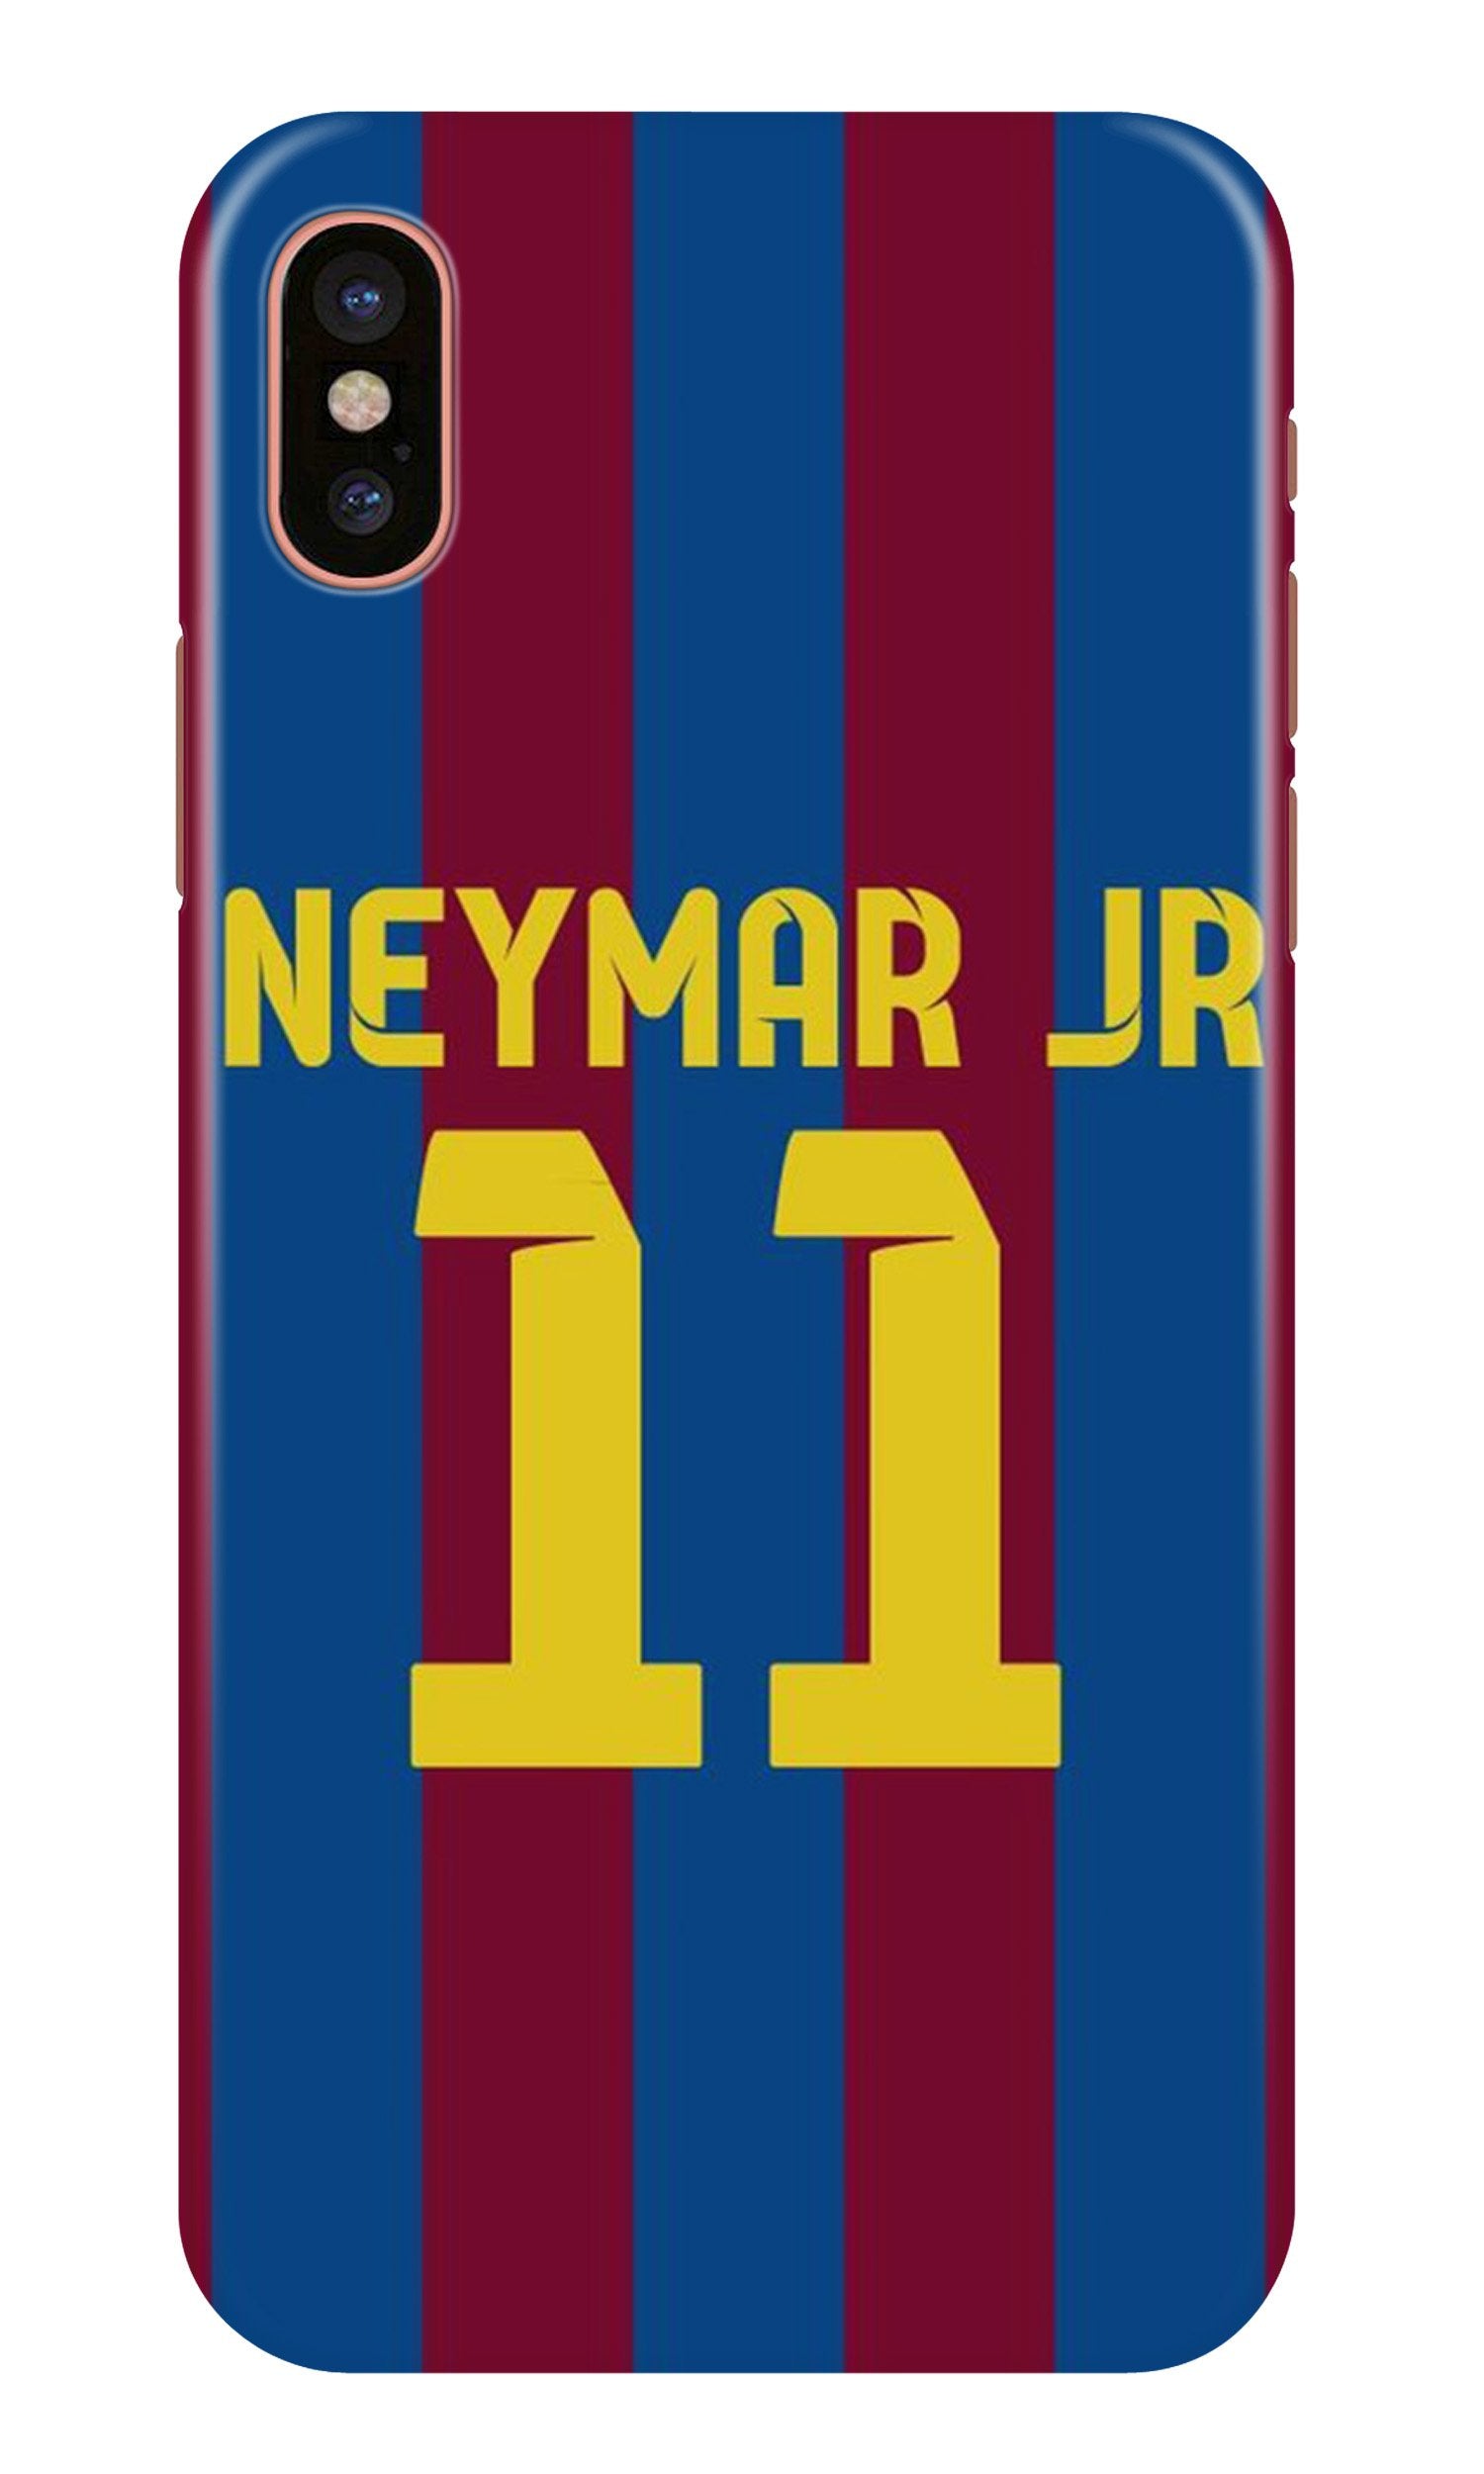 Neymar Jr Case for iPhone Xr(Design - 162)